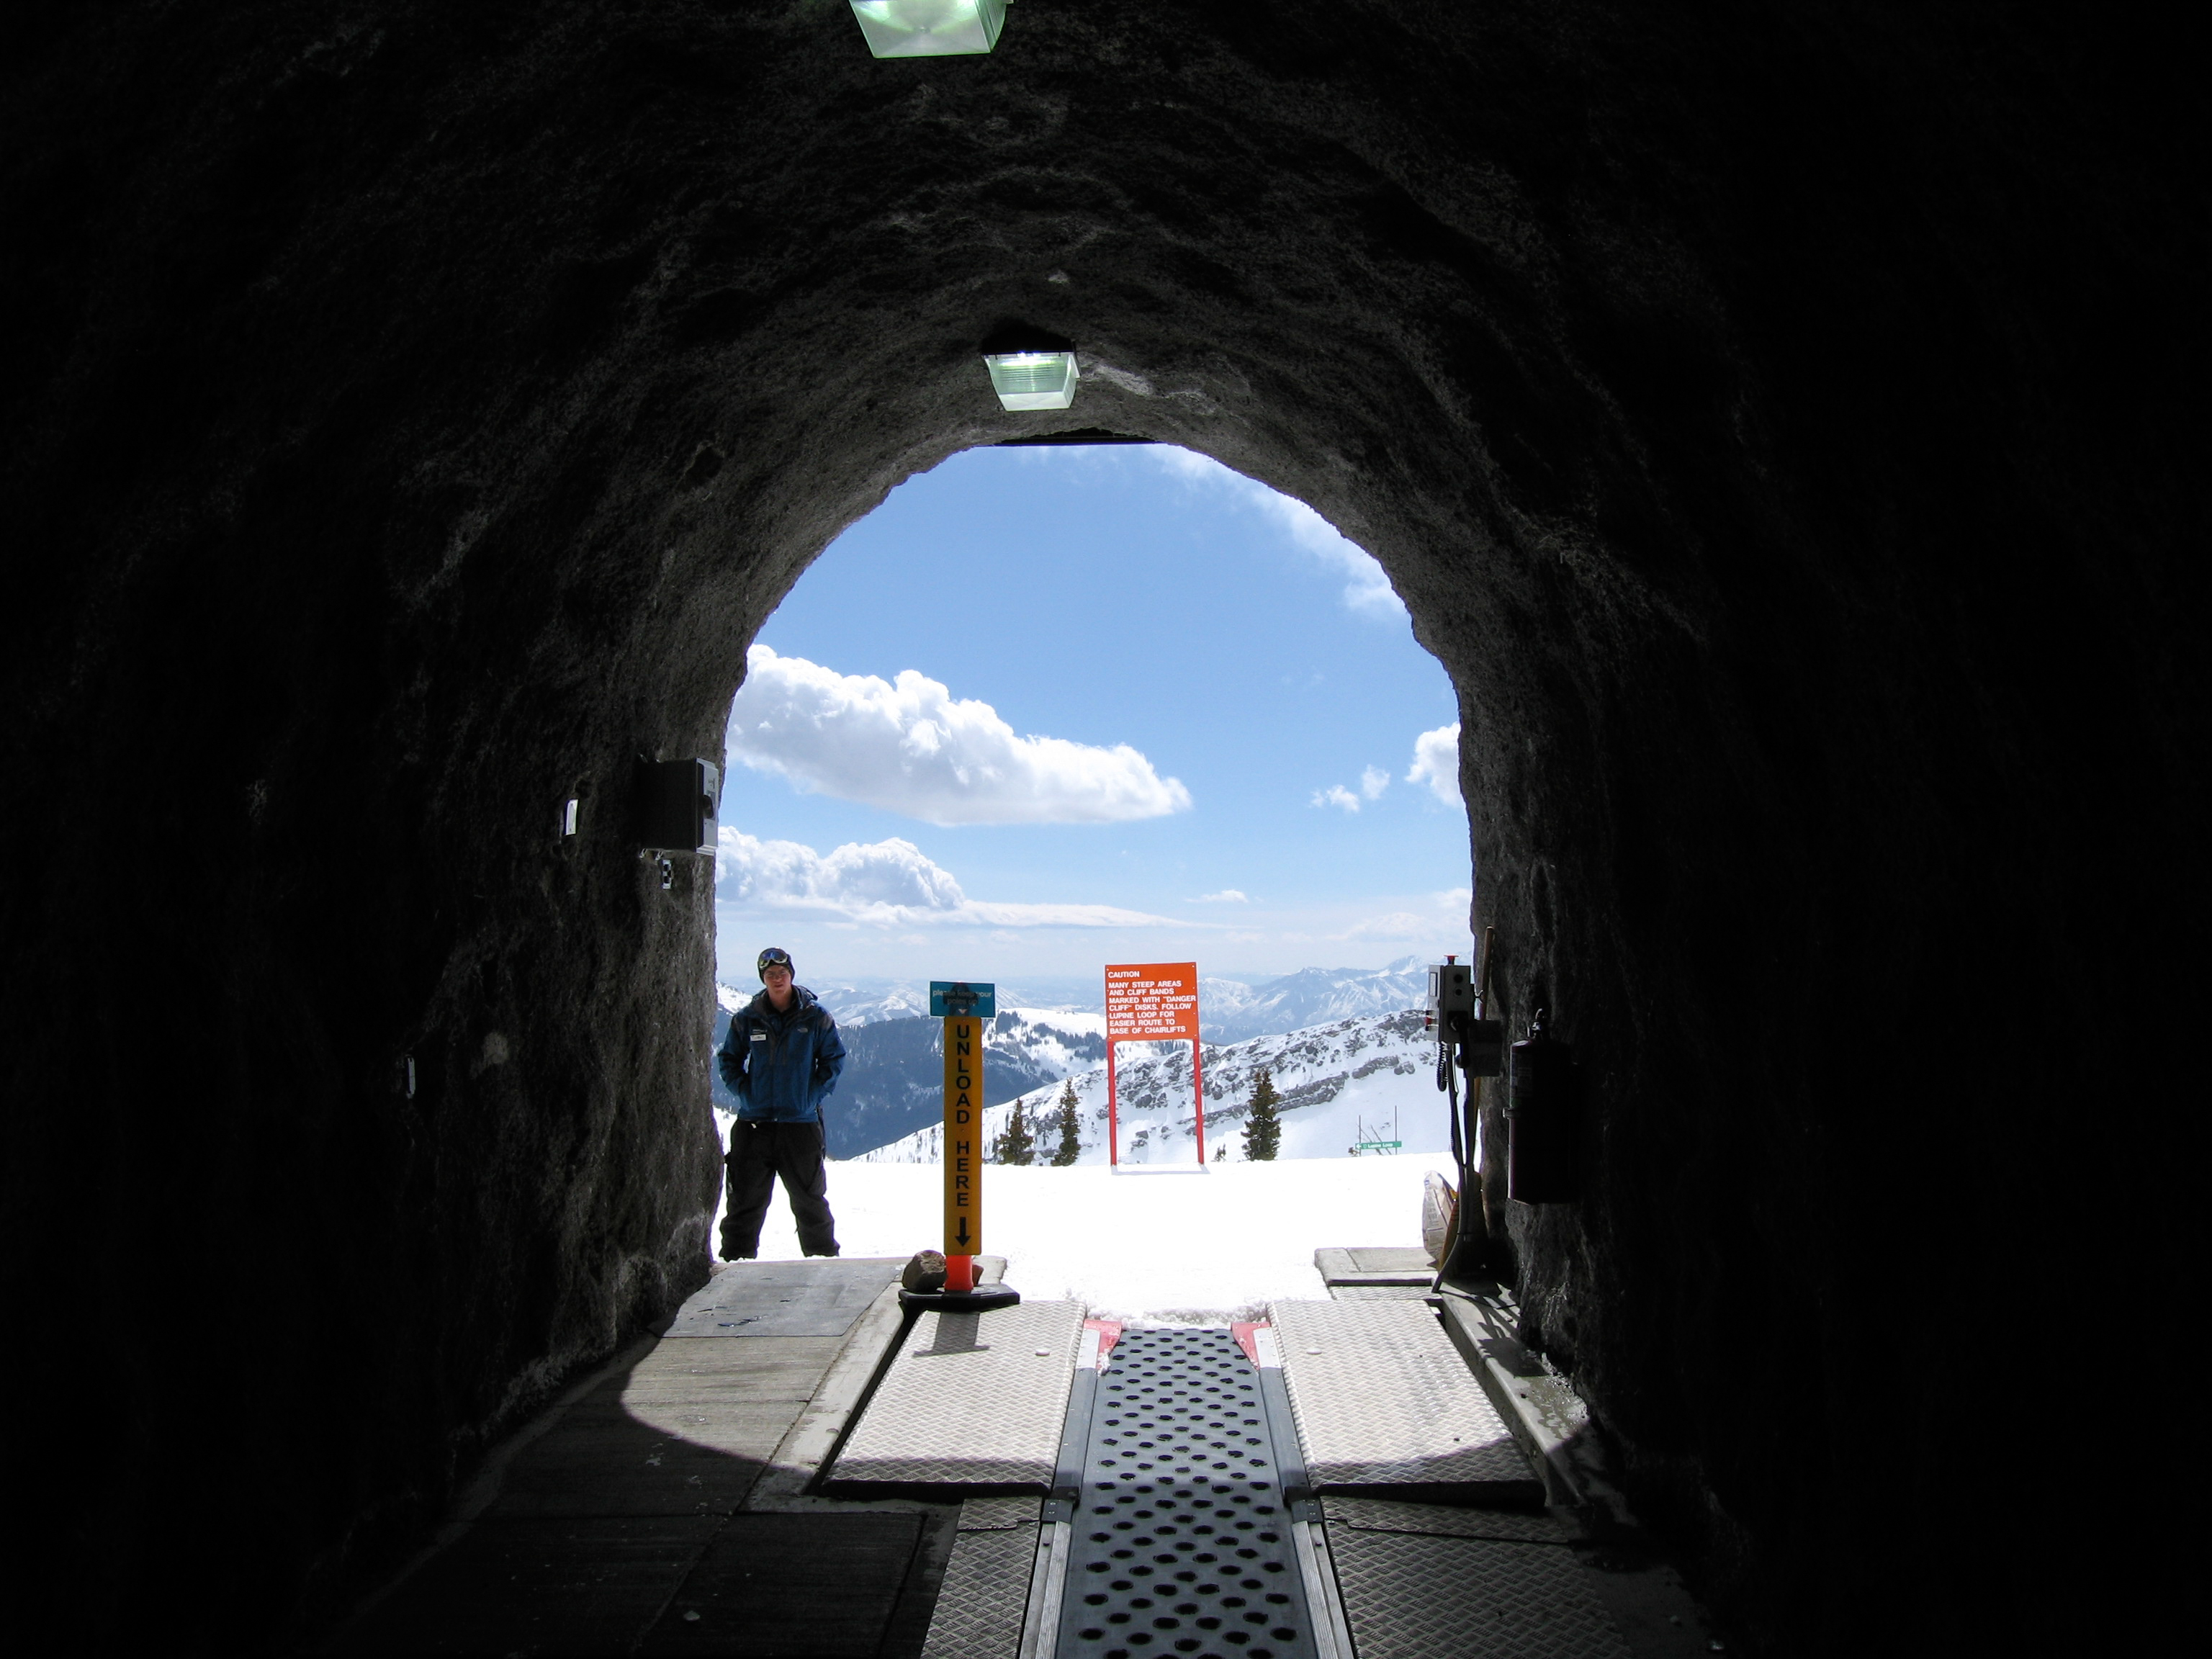 Peruvian Tunnel at Snowbird